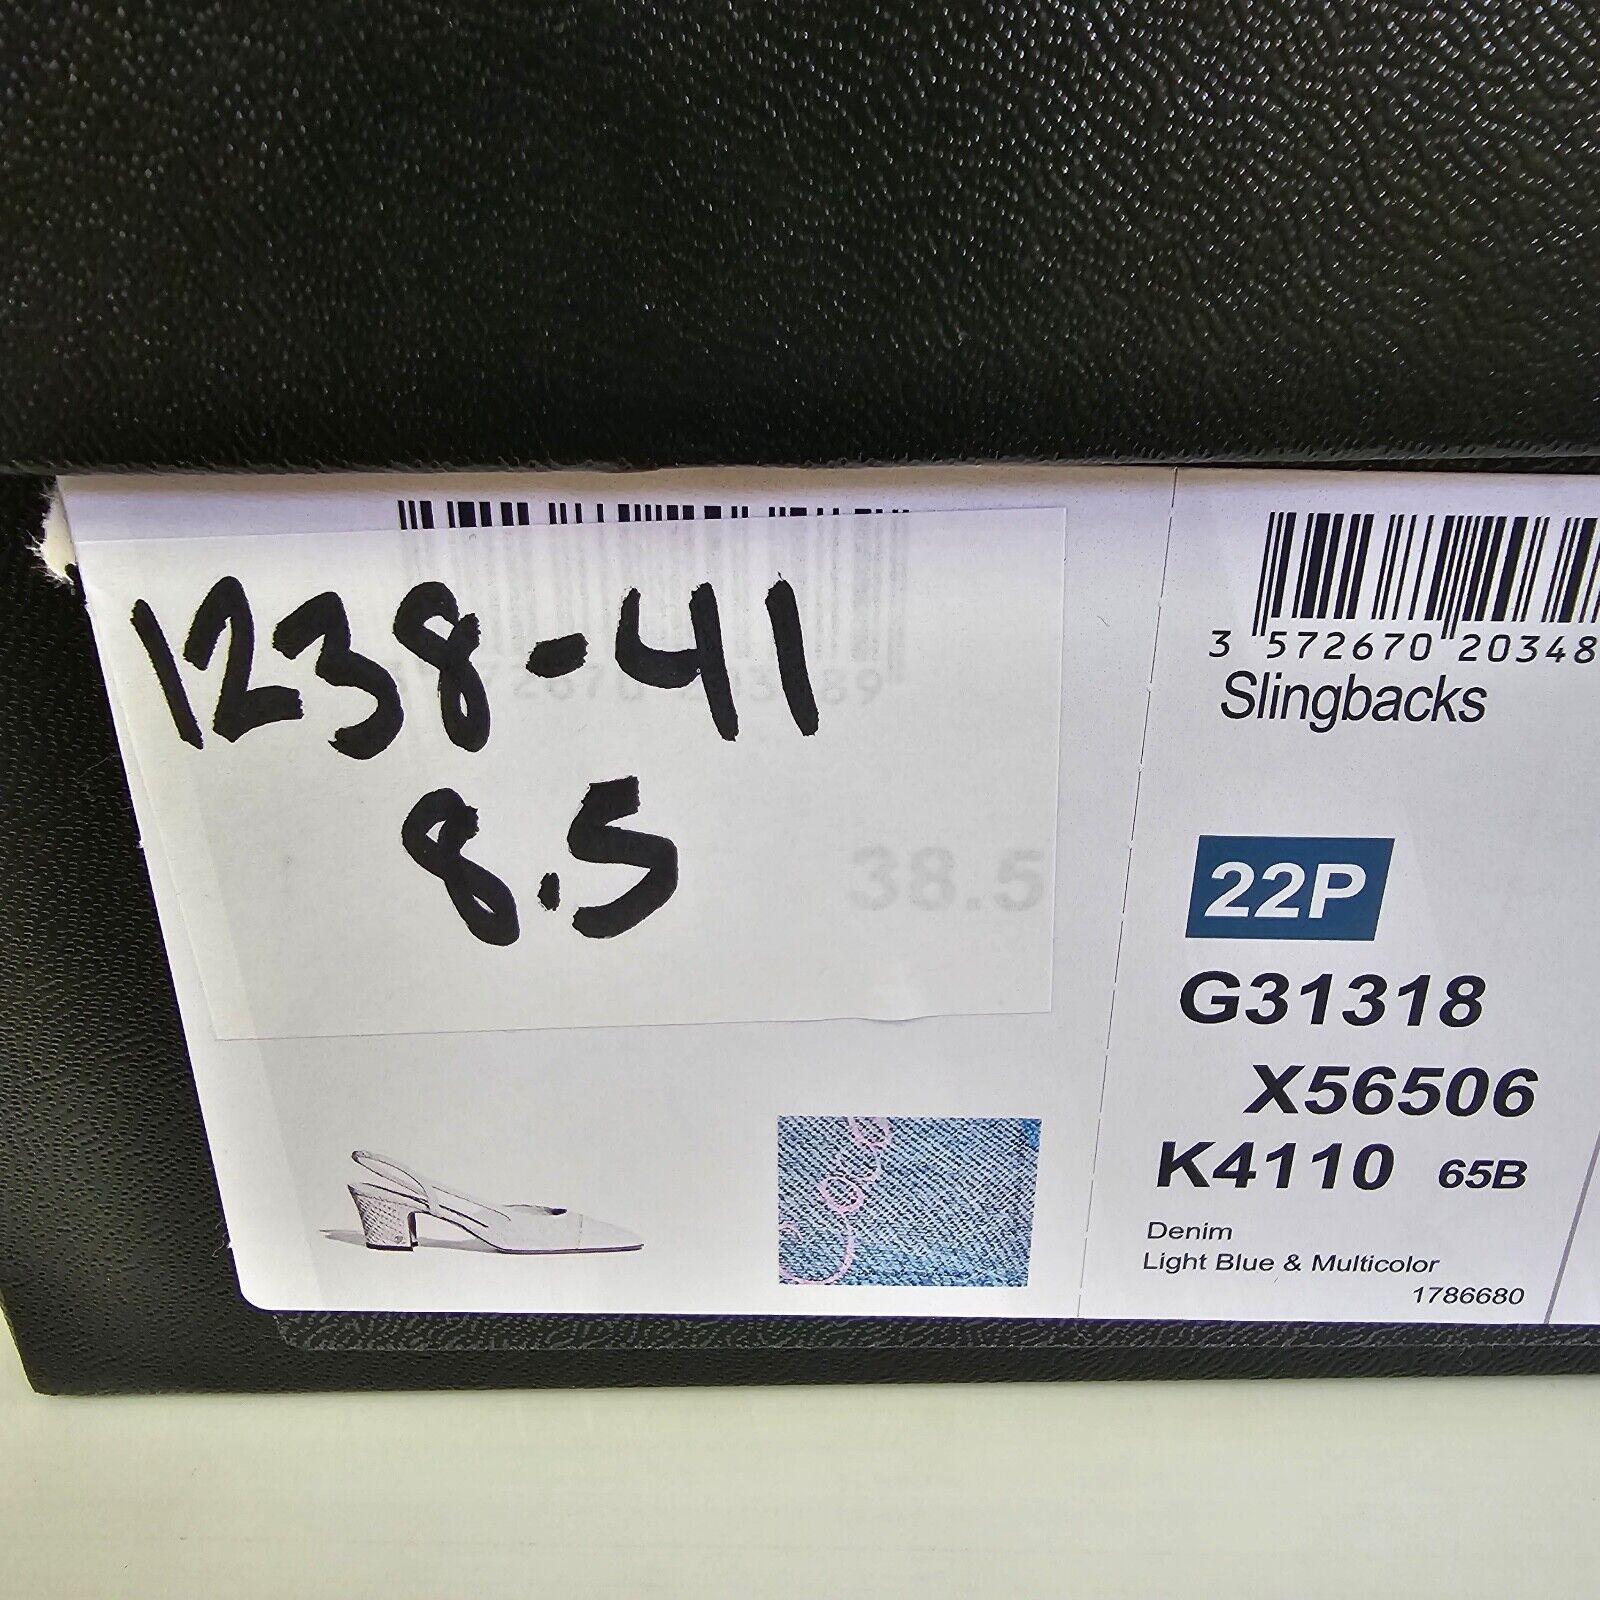 Chanel 22S G31318 Mademoiselle Coco Denim Slingback Heel 373838.5 EUR sizes